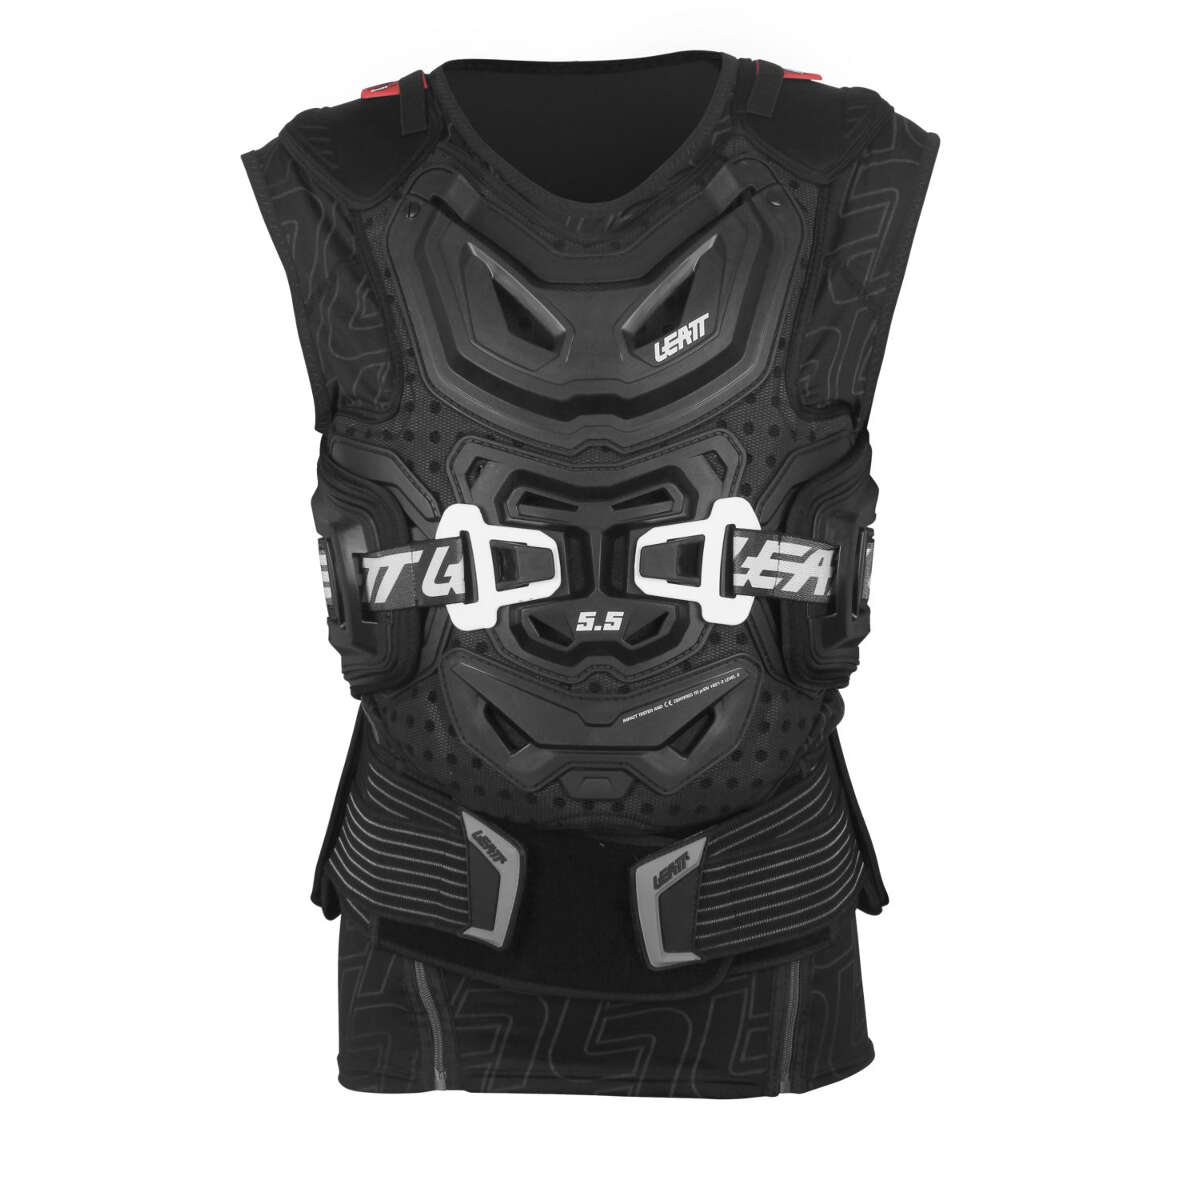 Leatt Protektorweste Body Vest 5.5 Schwarz